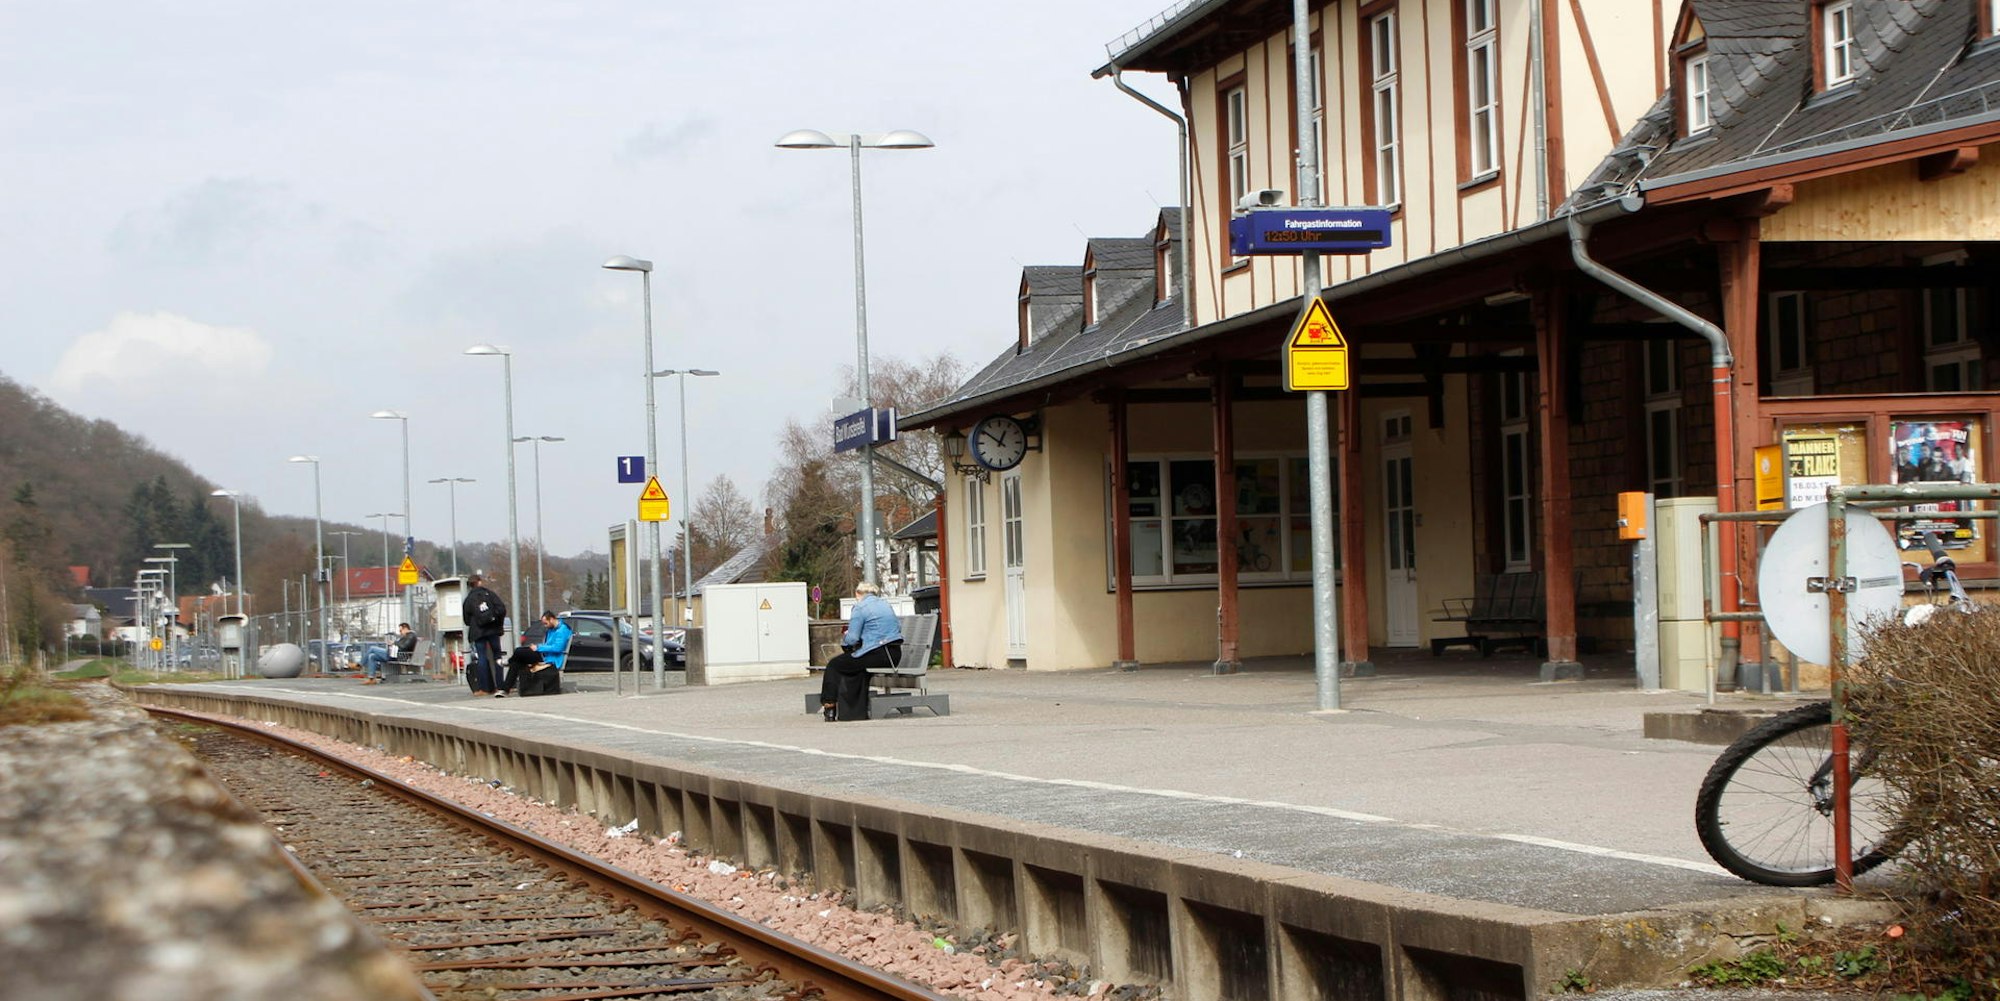 Bahnhof Bad Münstereifel